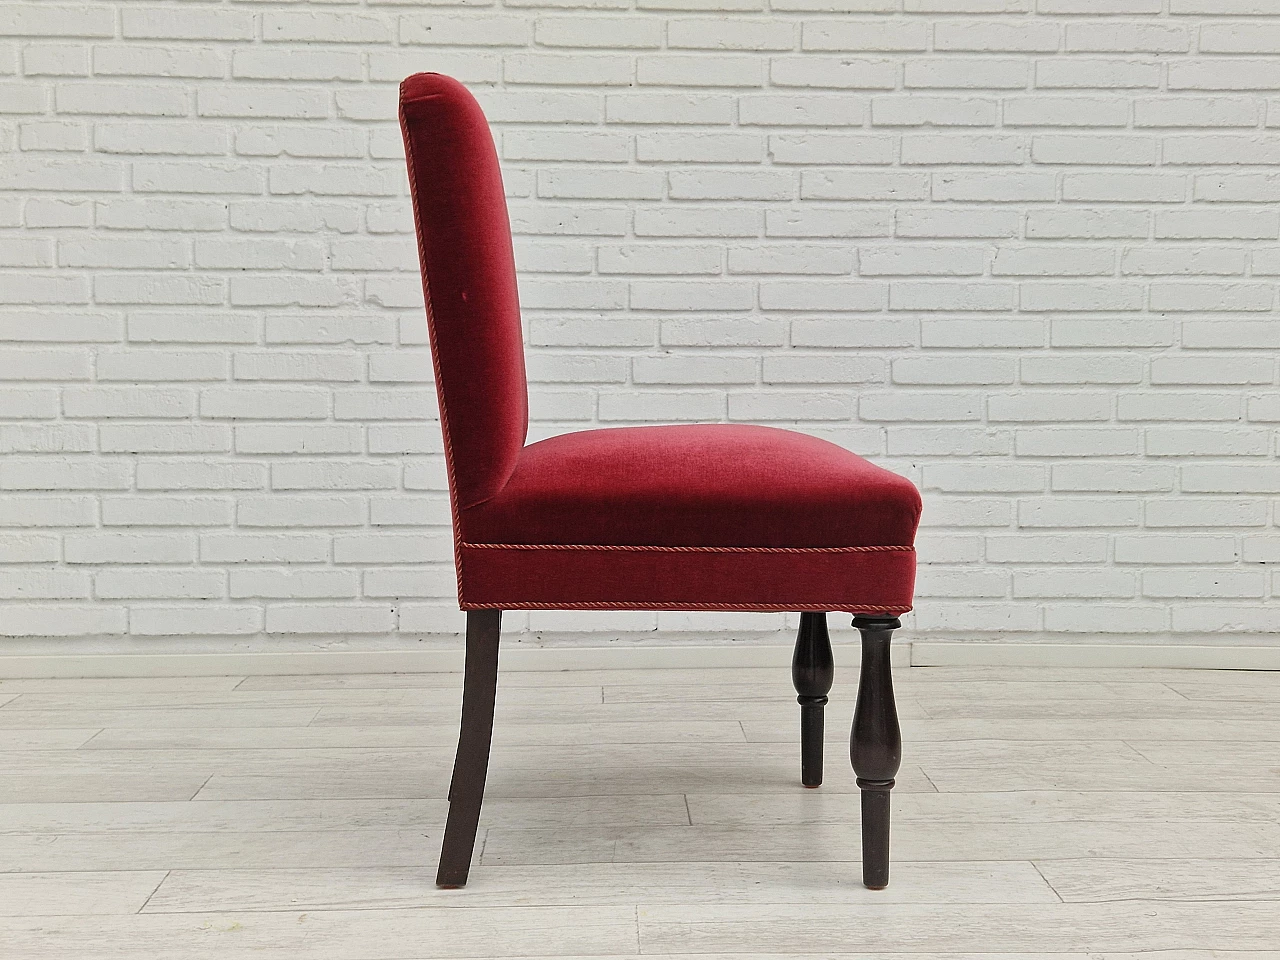 4 Danish oak chairs with cherry red velvet upholstery, 1950s 19